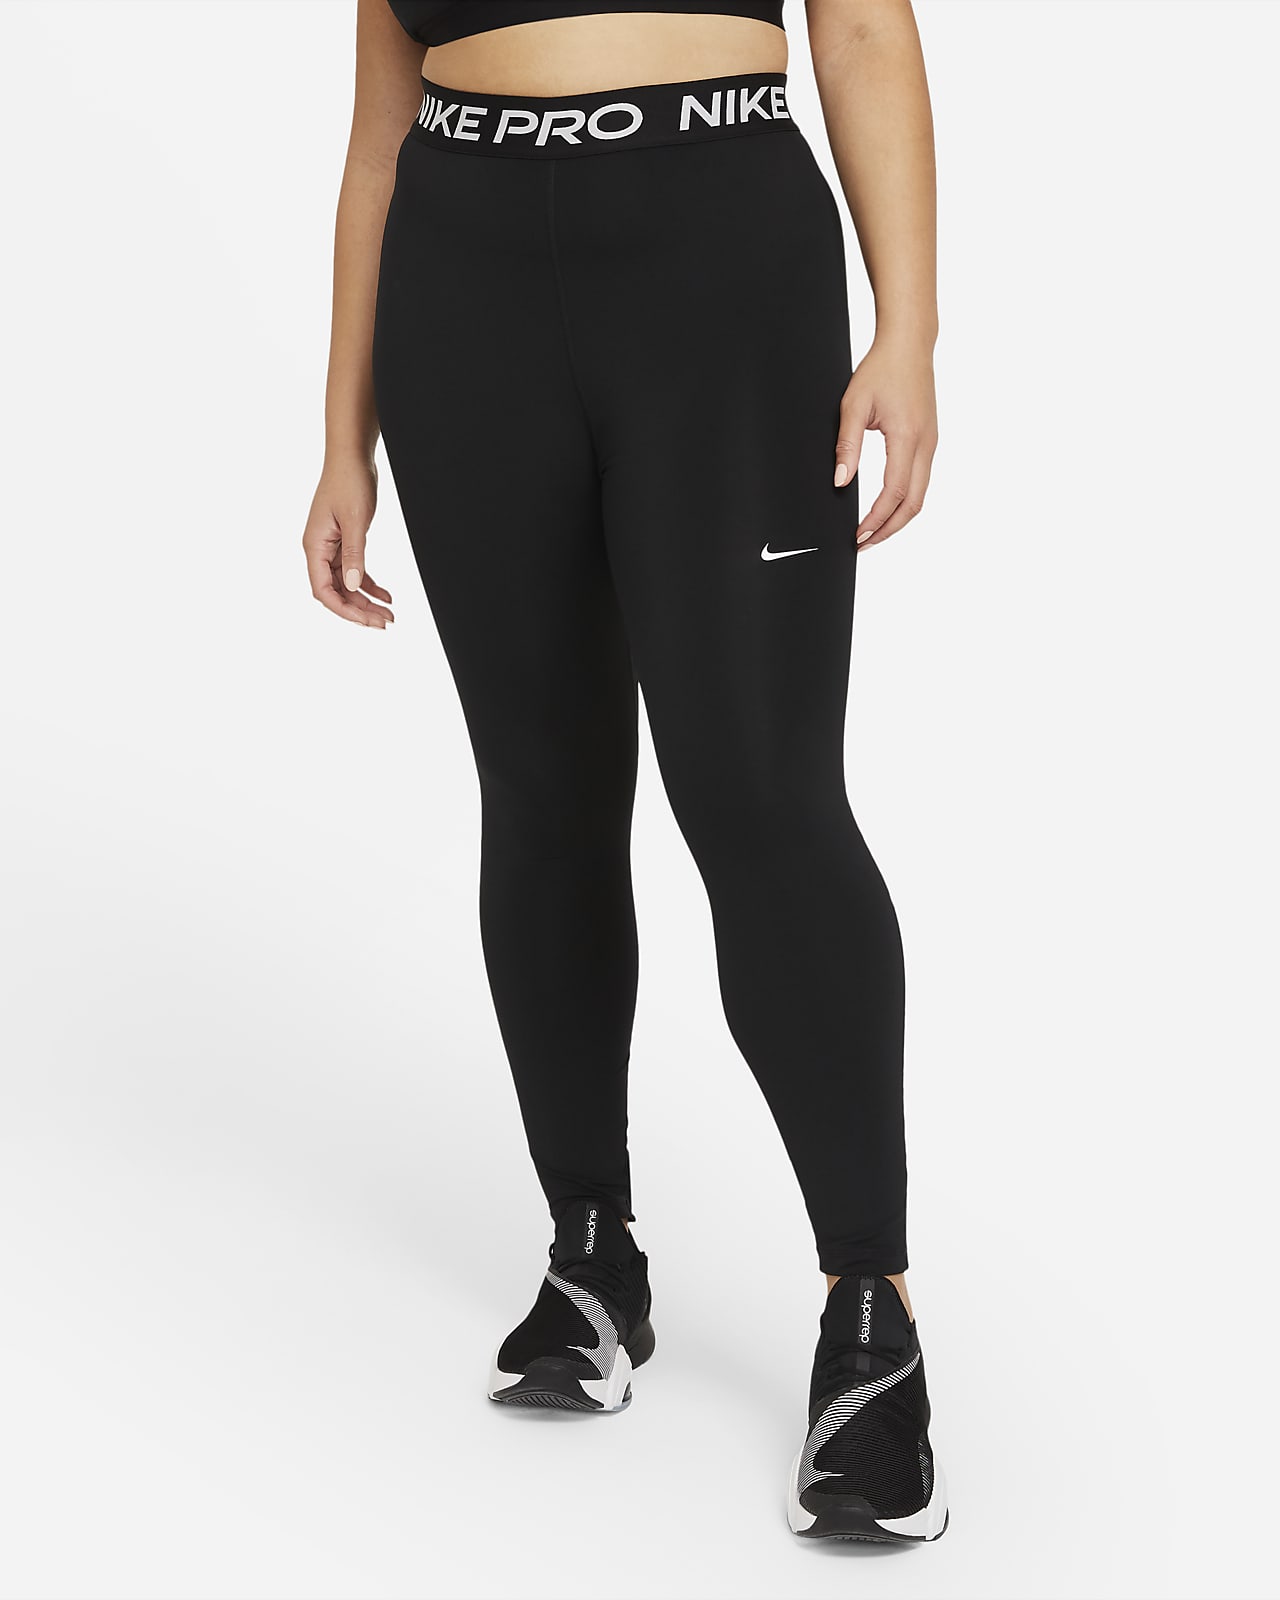 Buy > nike pro women's leggings black > in stock